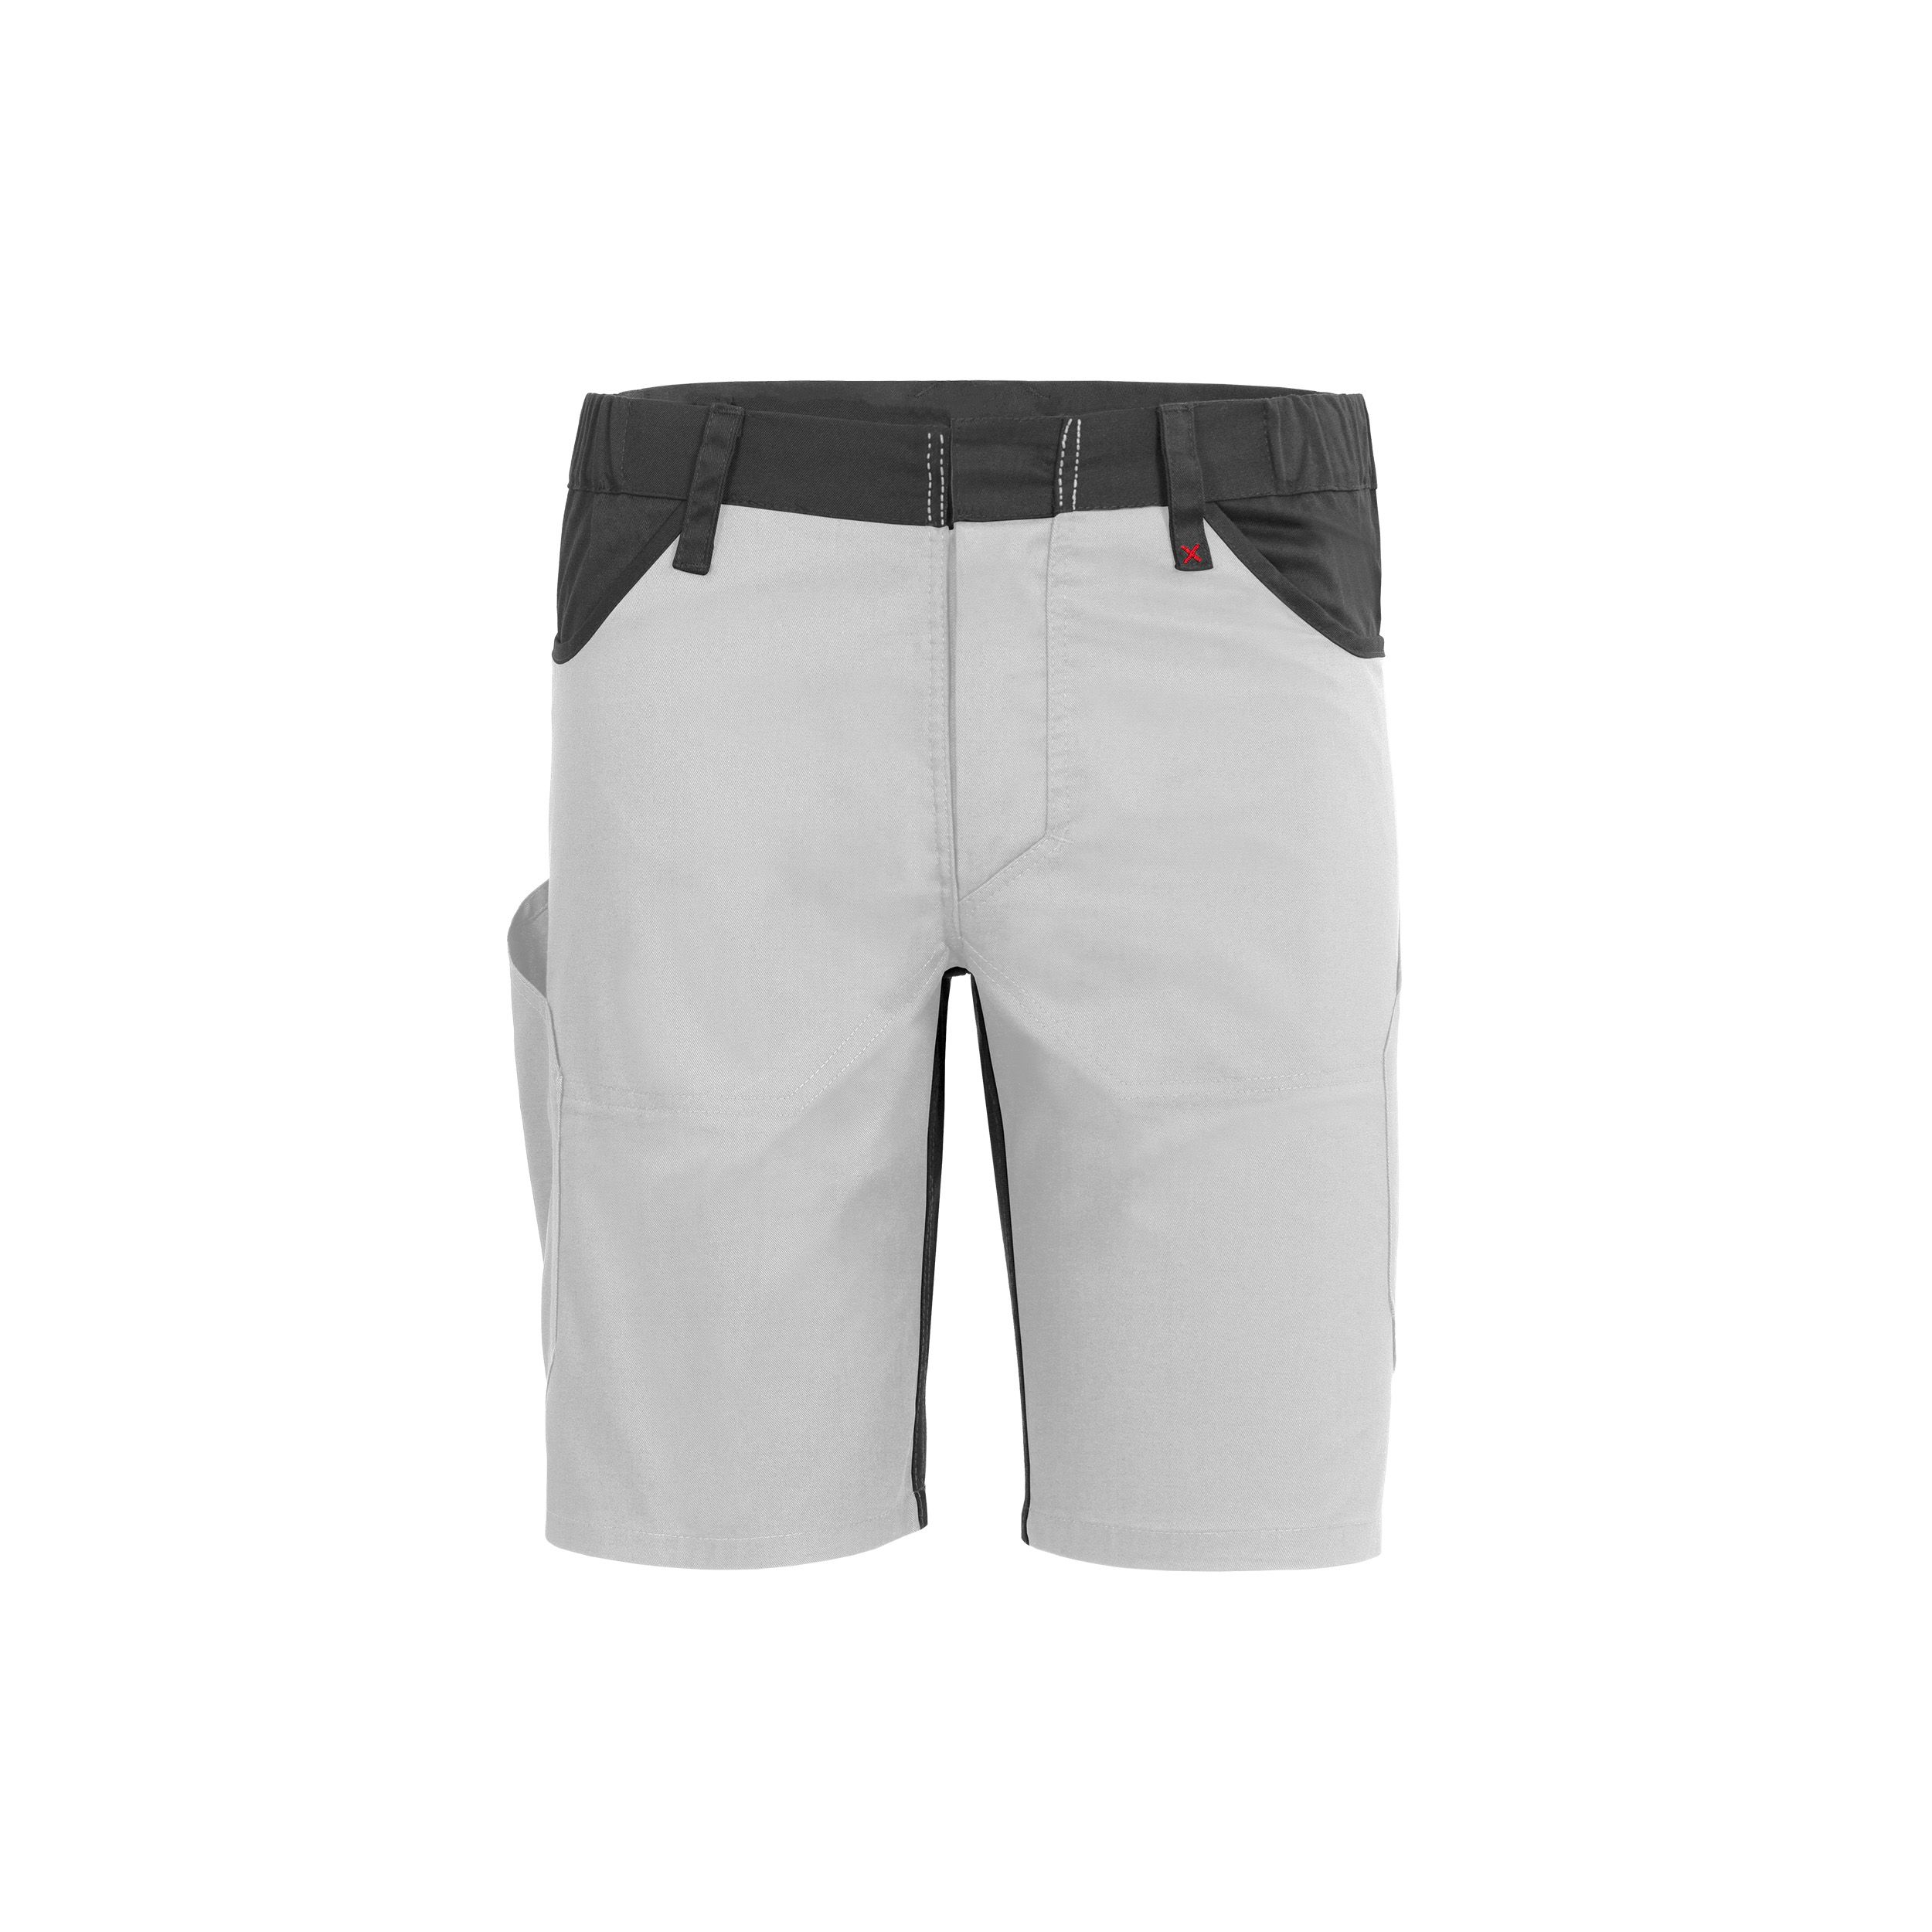 Shorts "X-Serie"